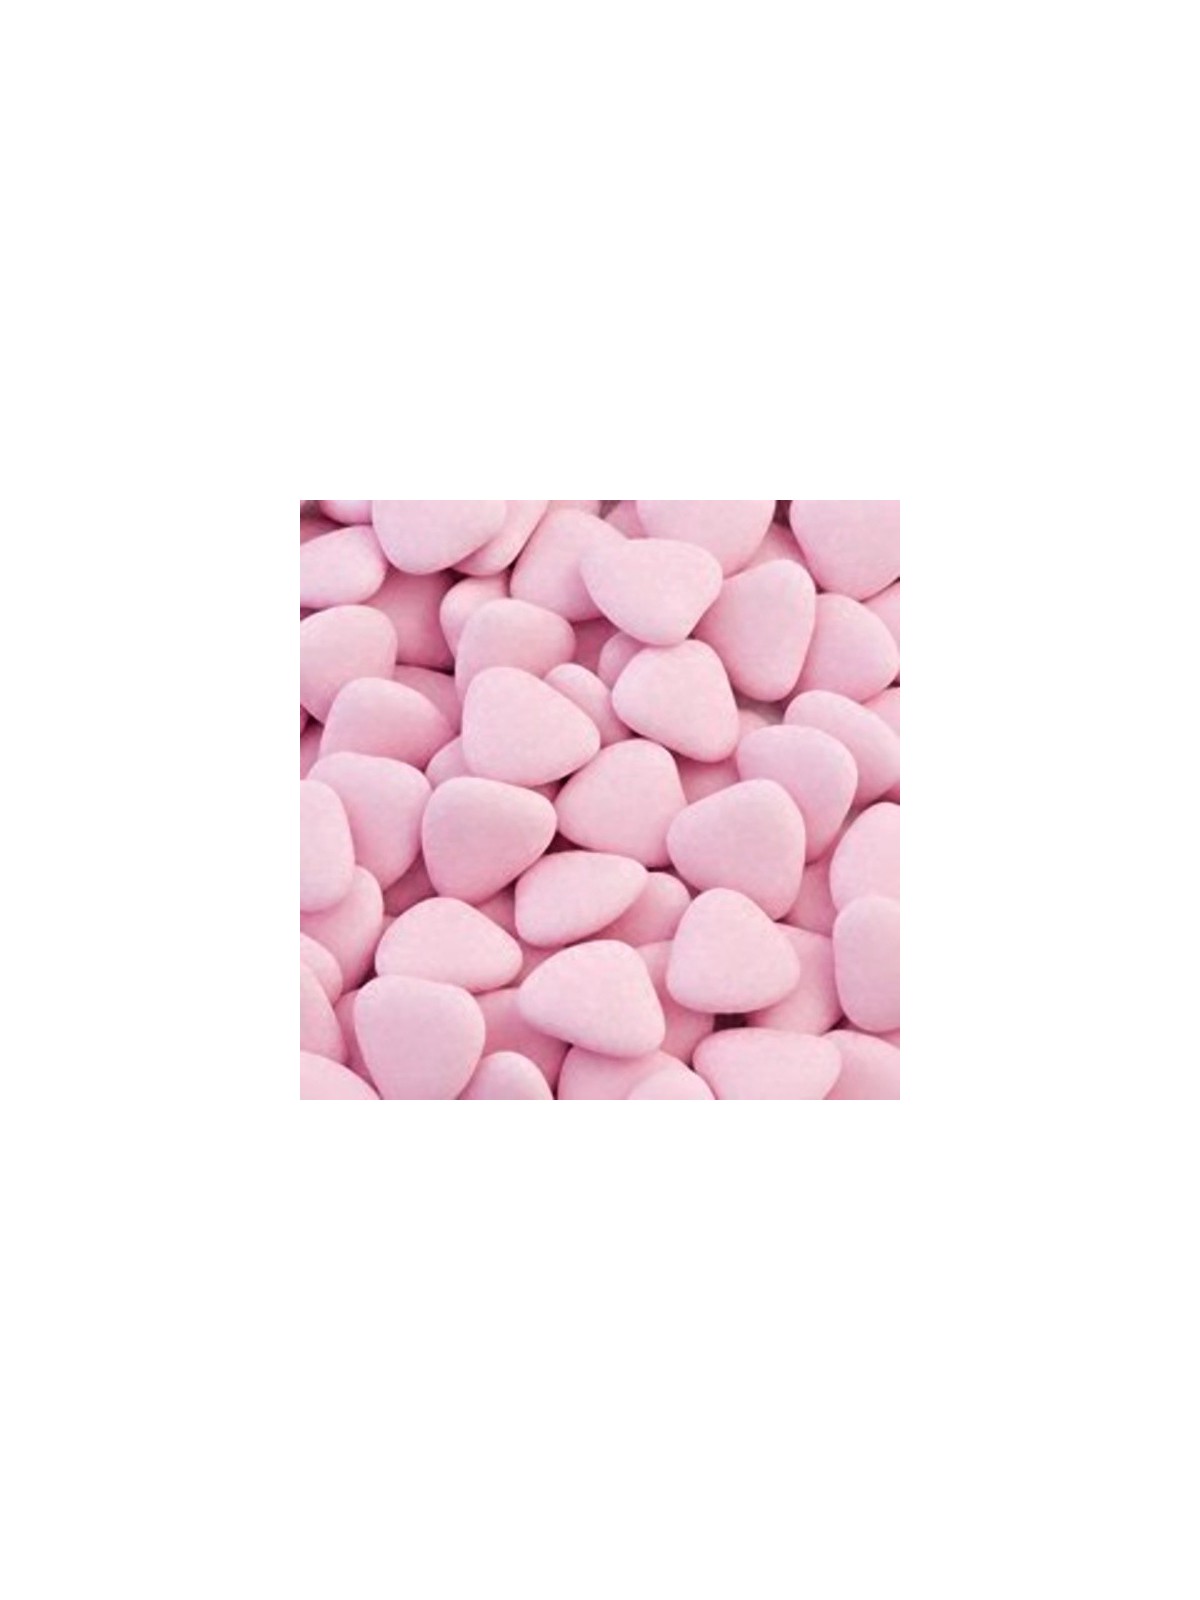 Čokoládová srdiečka růžová - 100g